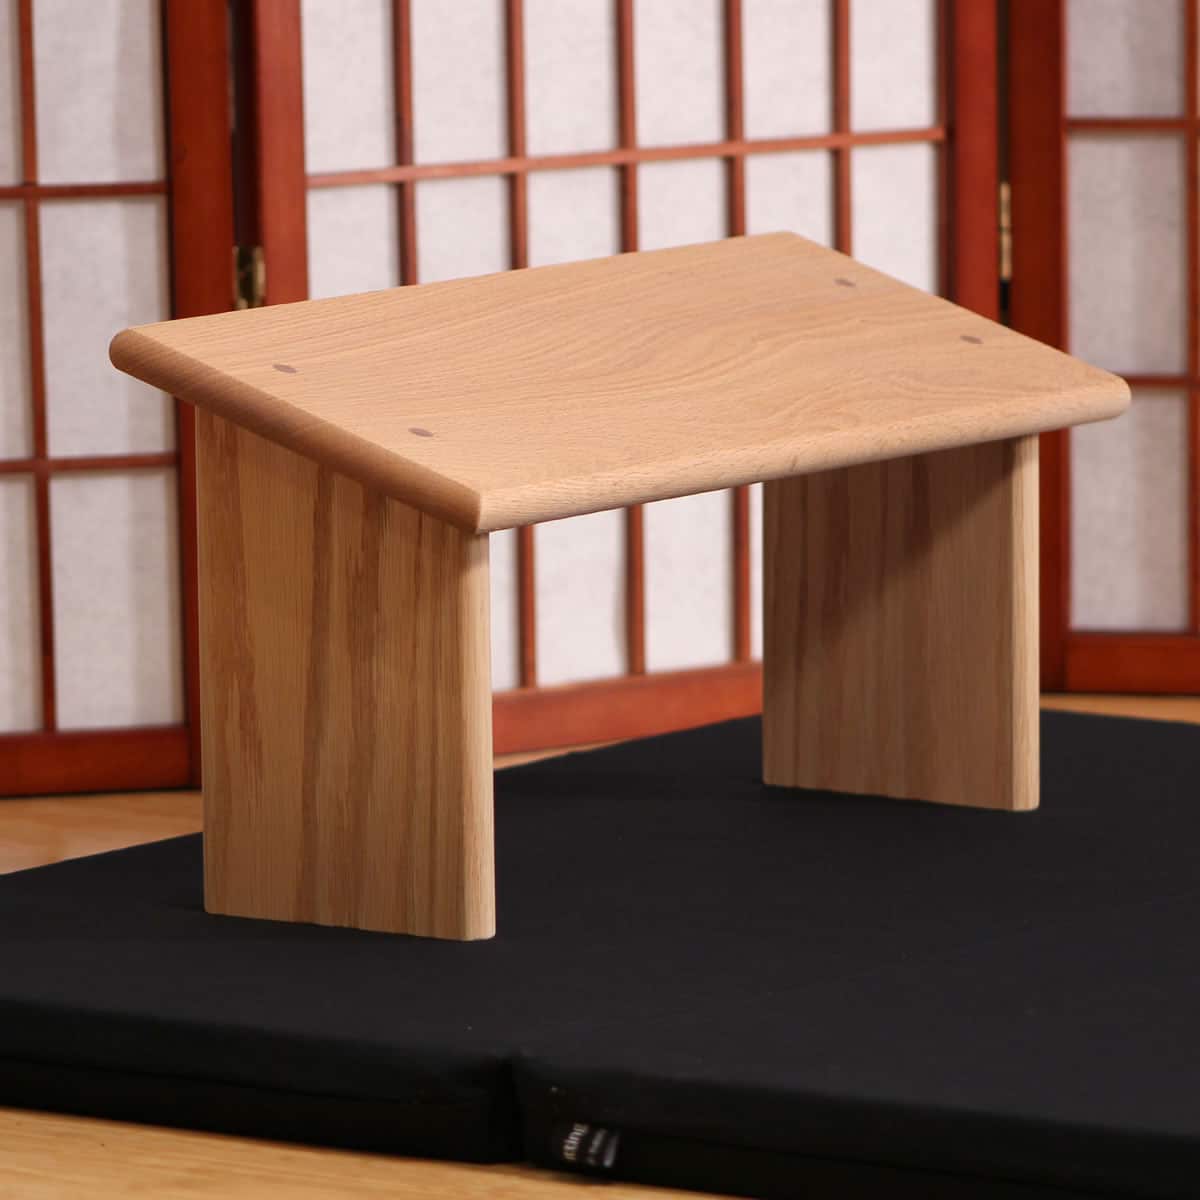 Traditional wooden meditation Bench no cushion